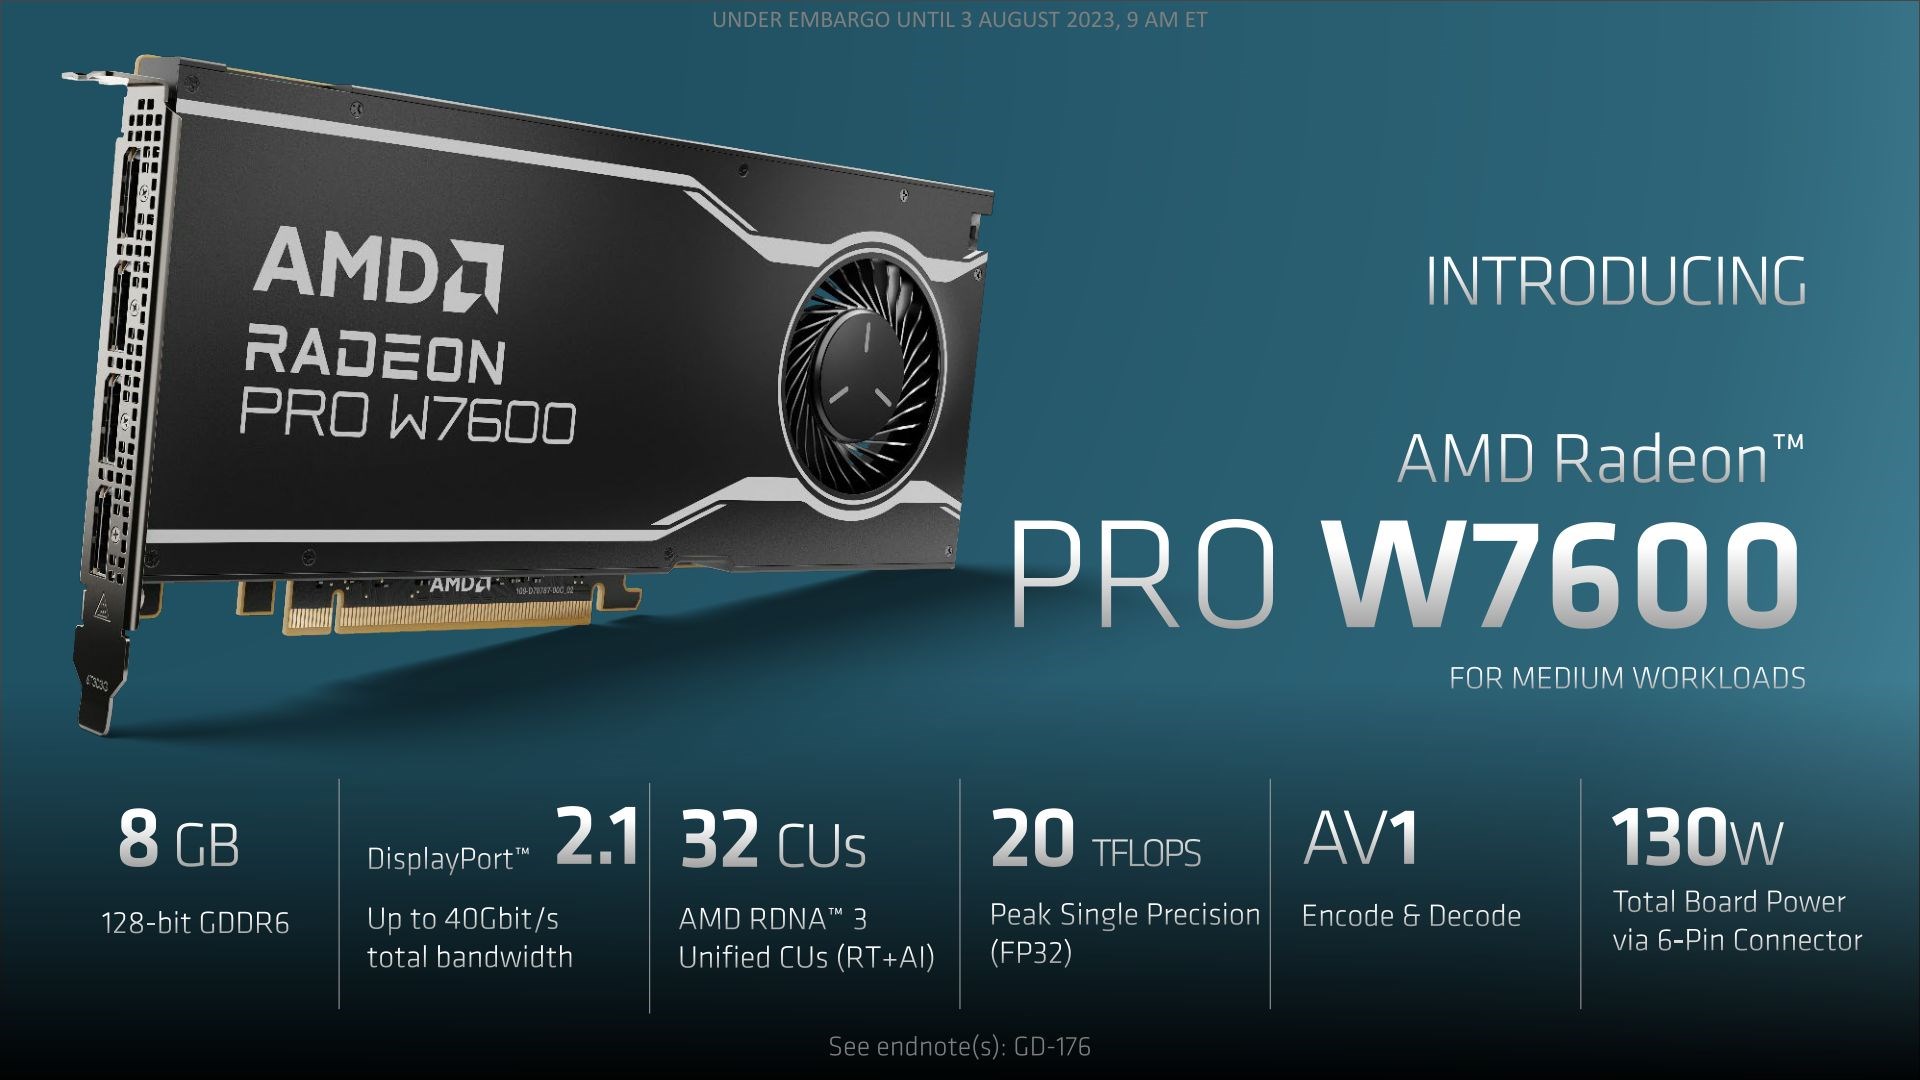 AMD Radeon Pro W7600 